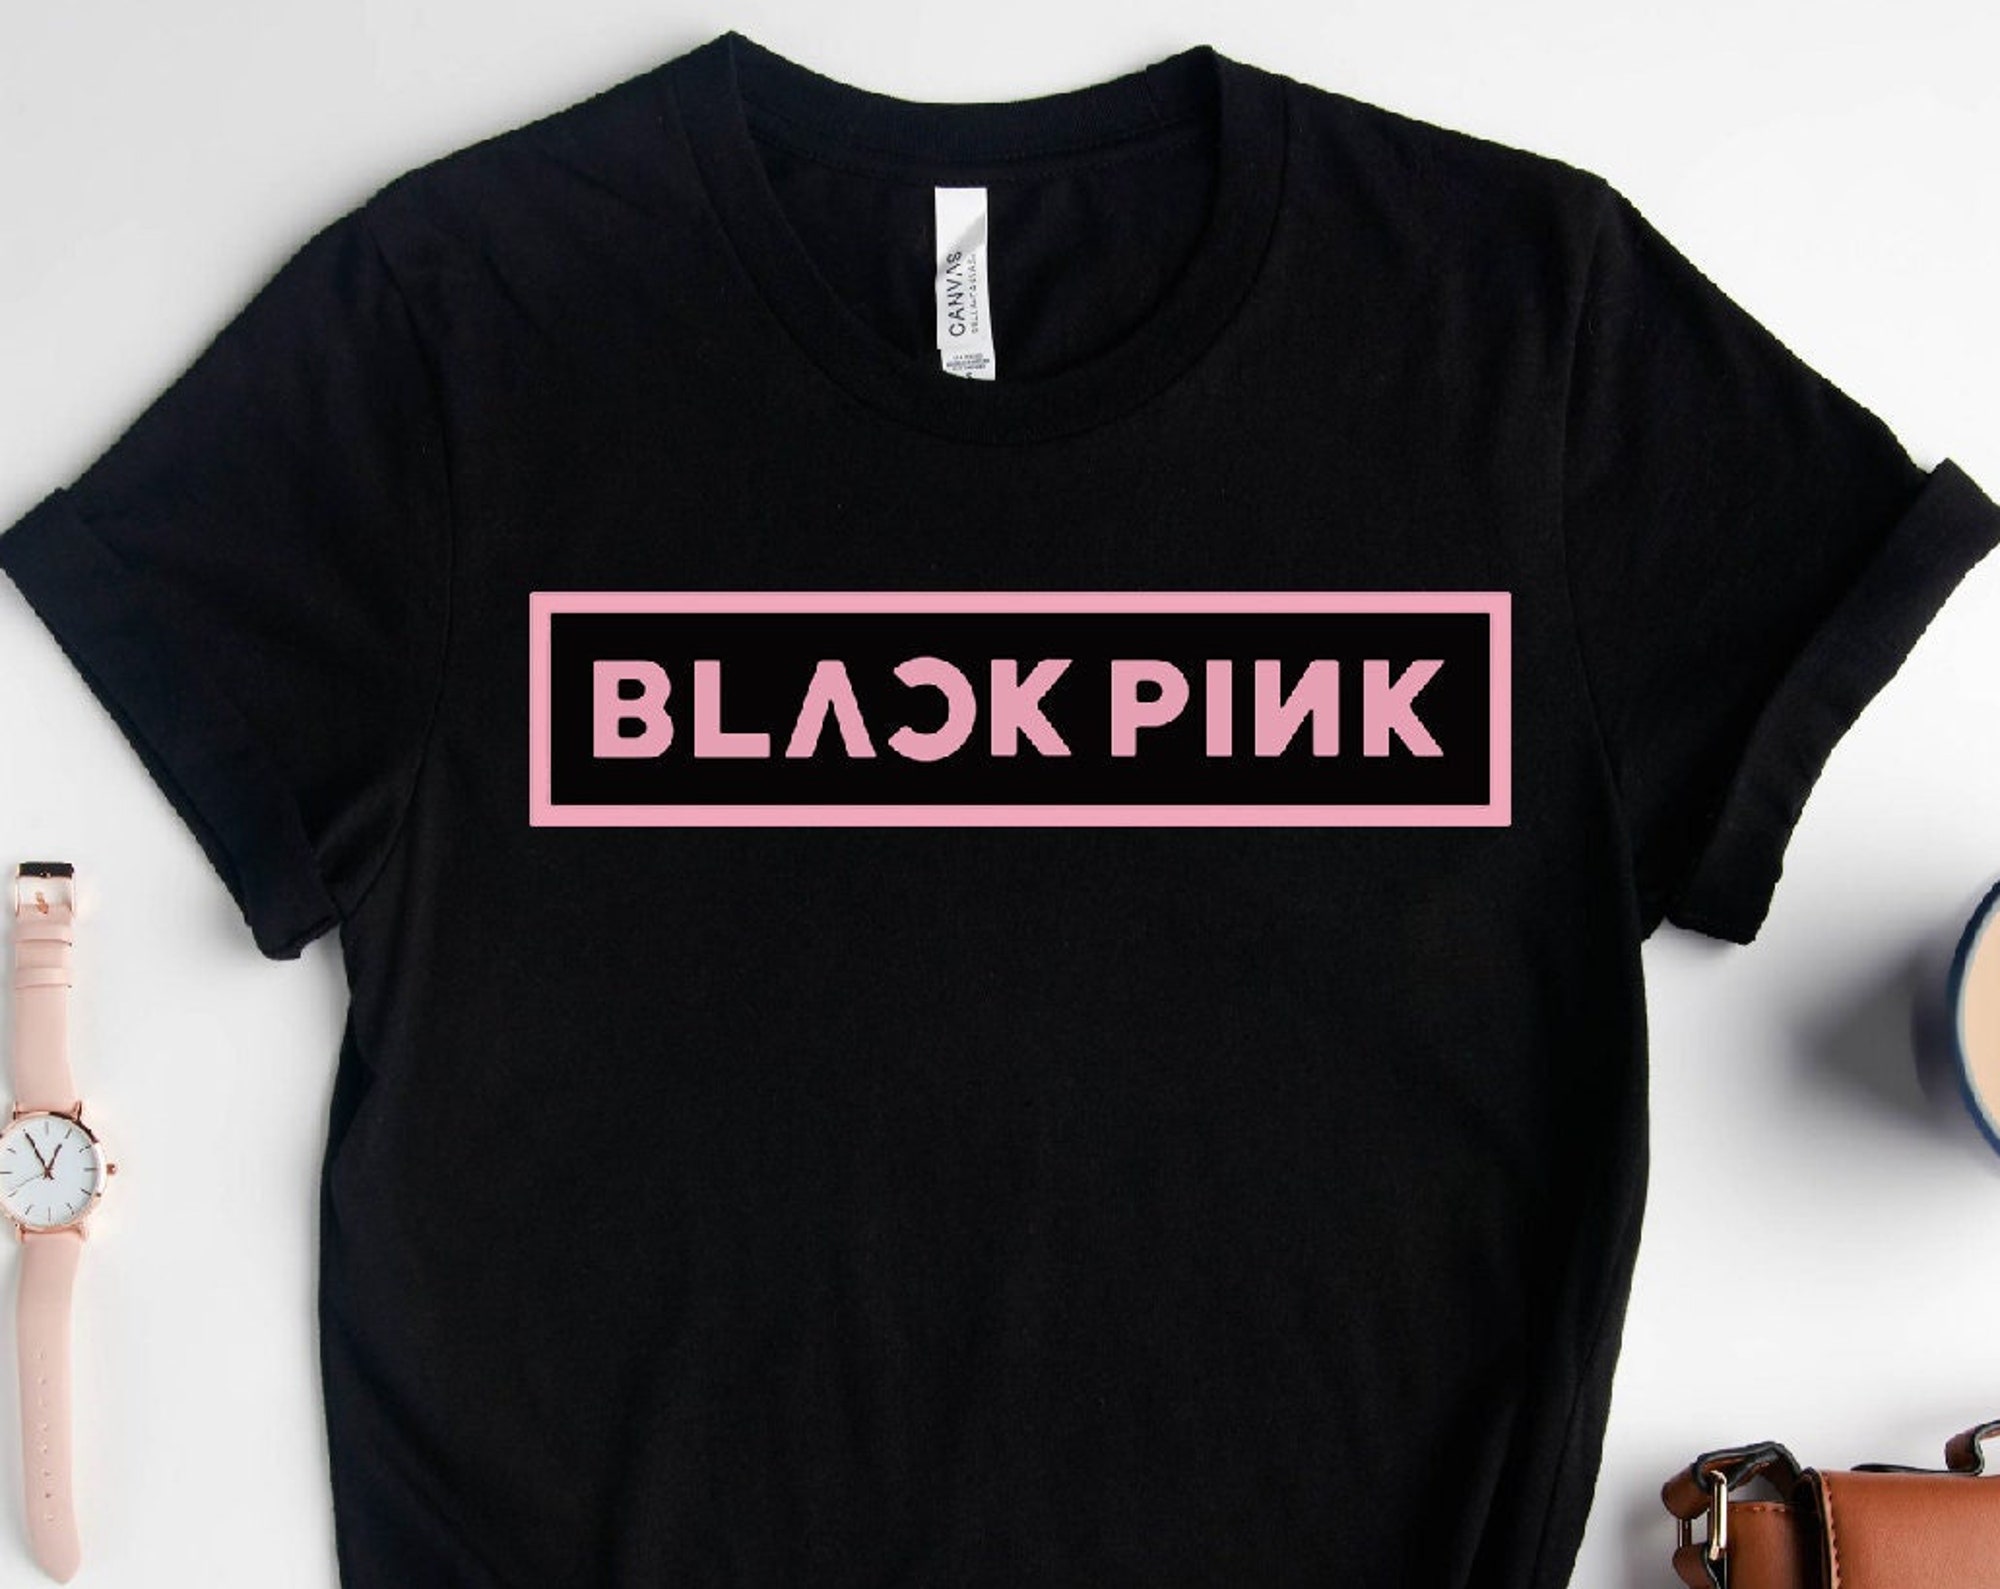 Discover Maglietta T-Shirt BlackPink Uomo Donna Bambini - Blackpink In Your Area Regalo Kpop